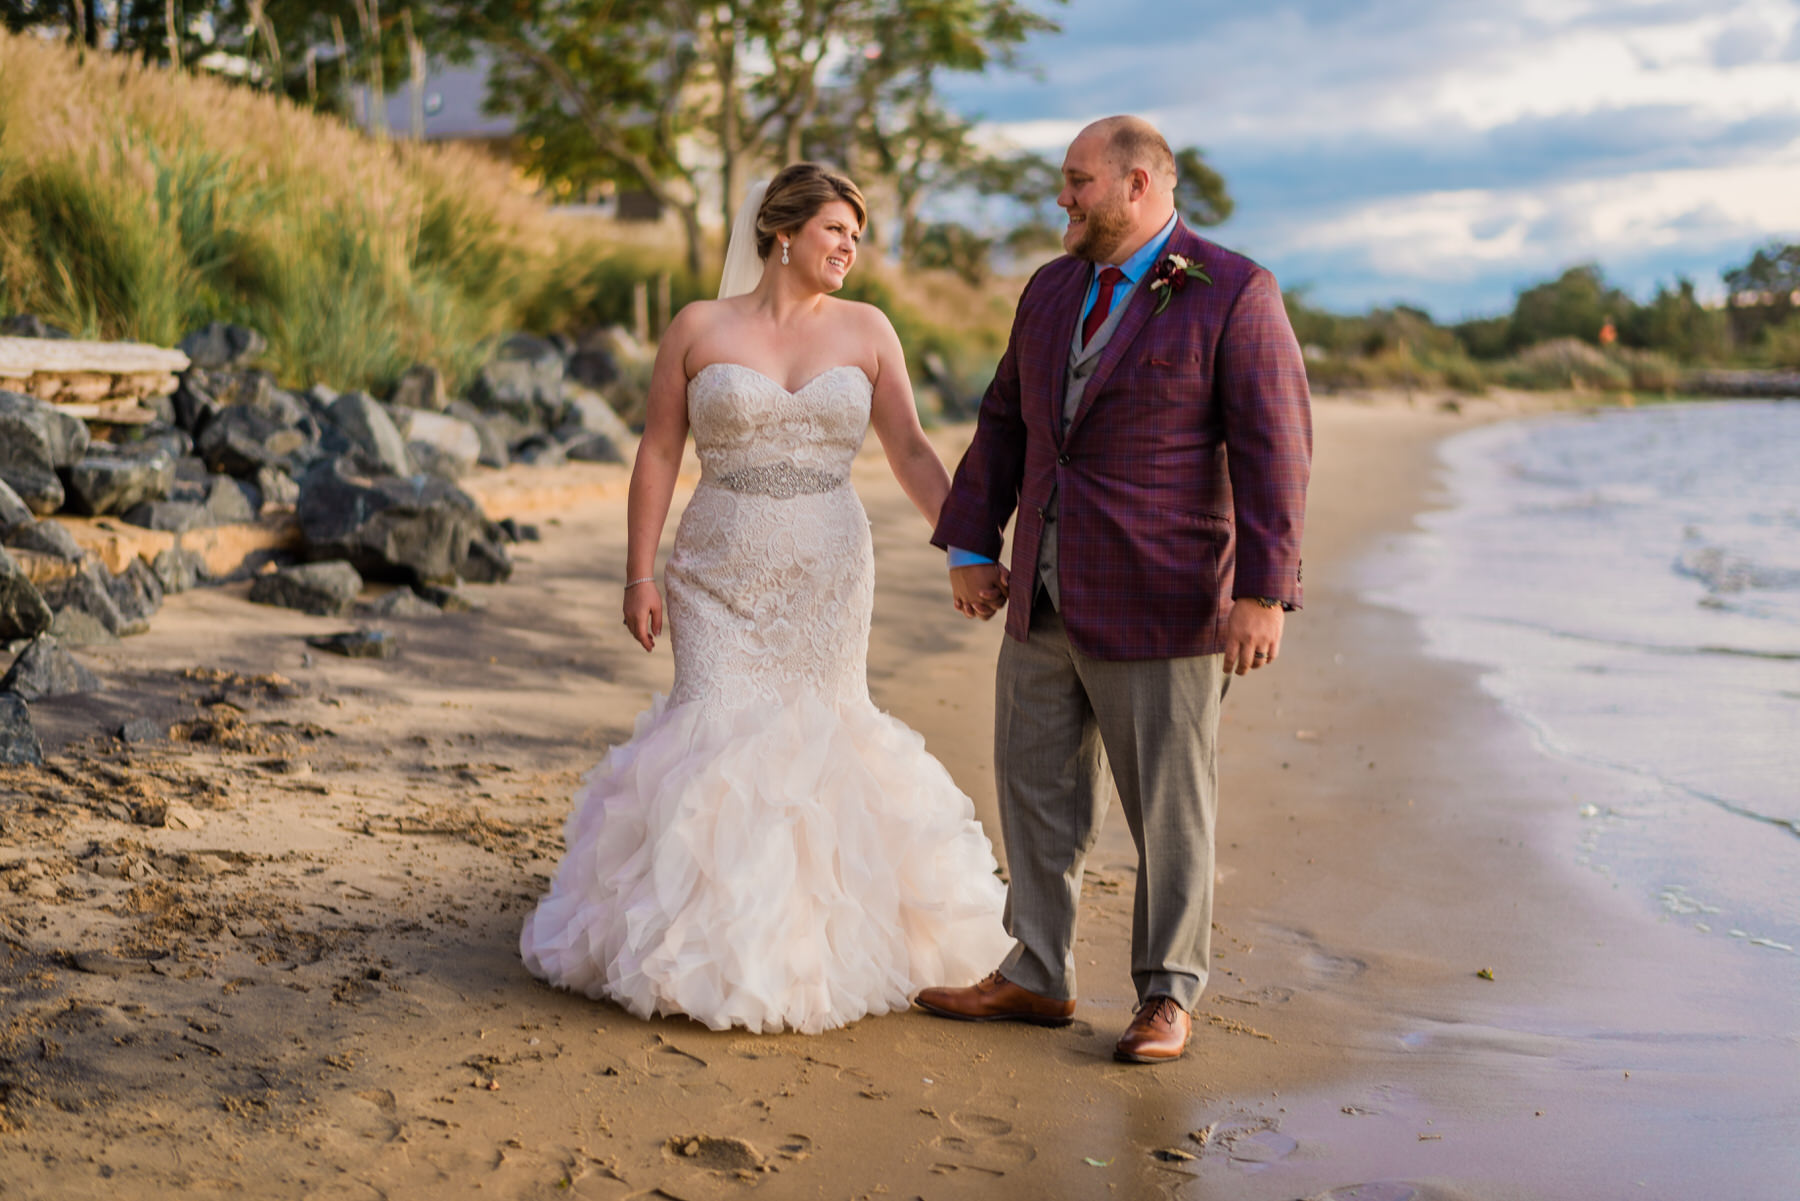 Chesapeake Bay Beach Club Wedding Cost Info With Photos